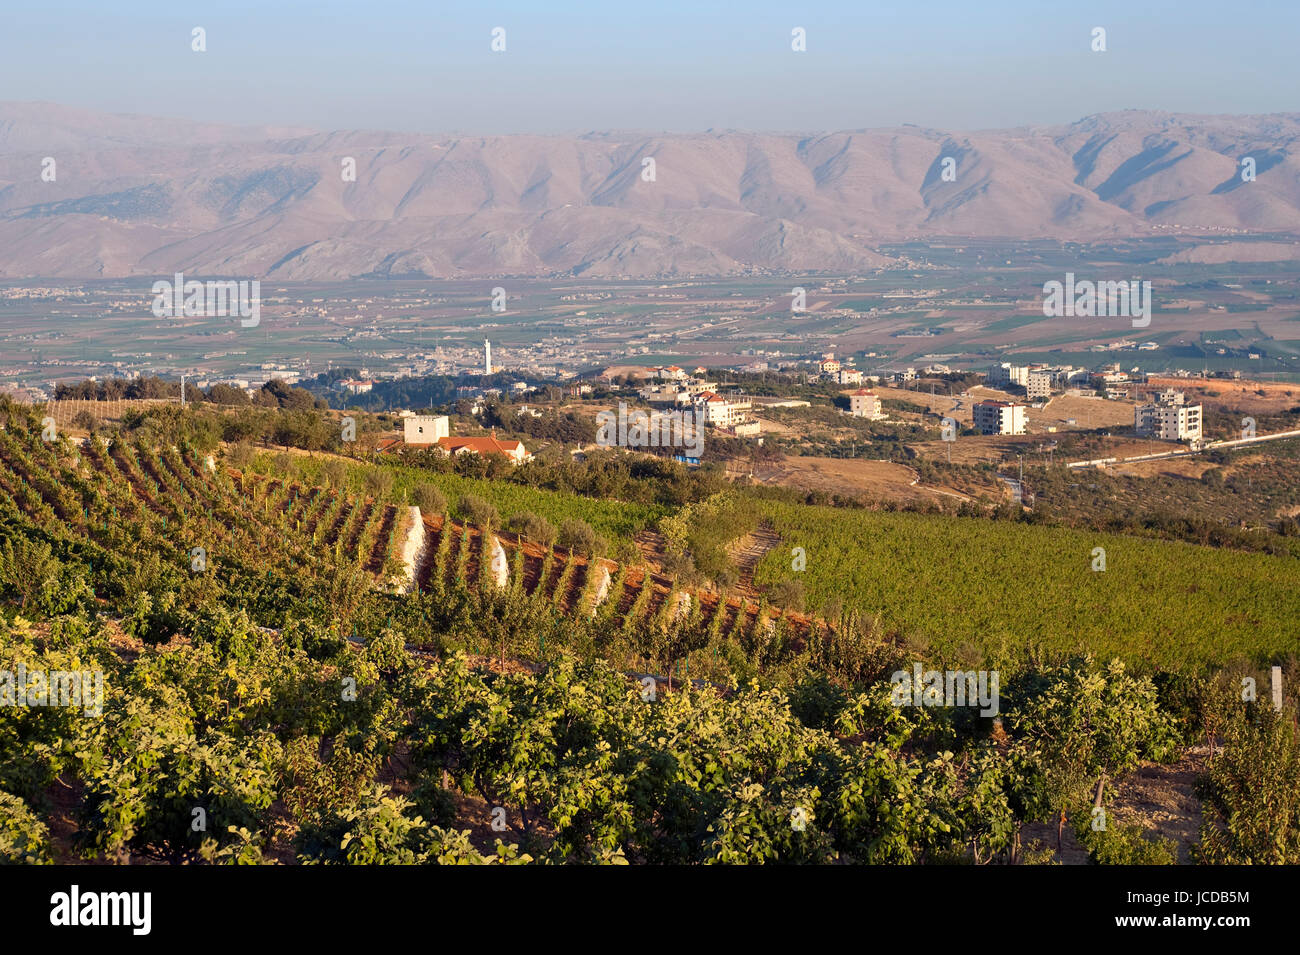 viticulture lebanon Stock Photo